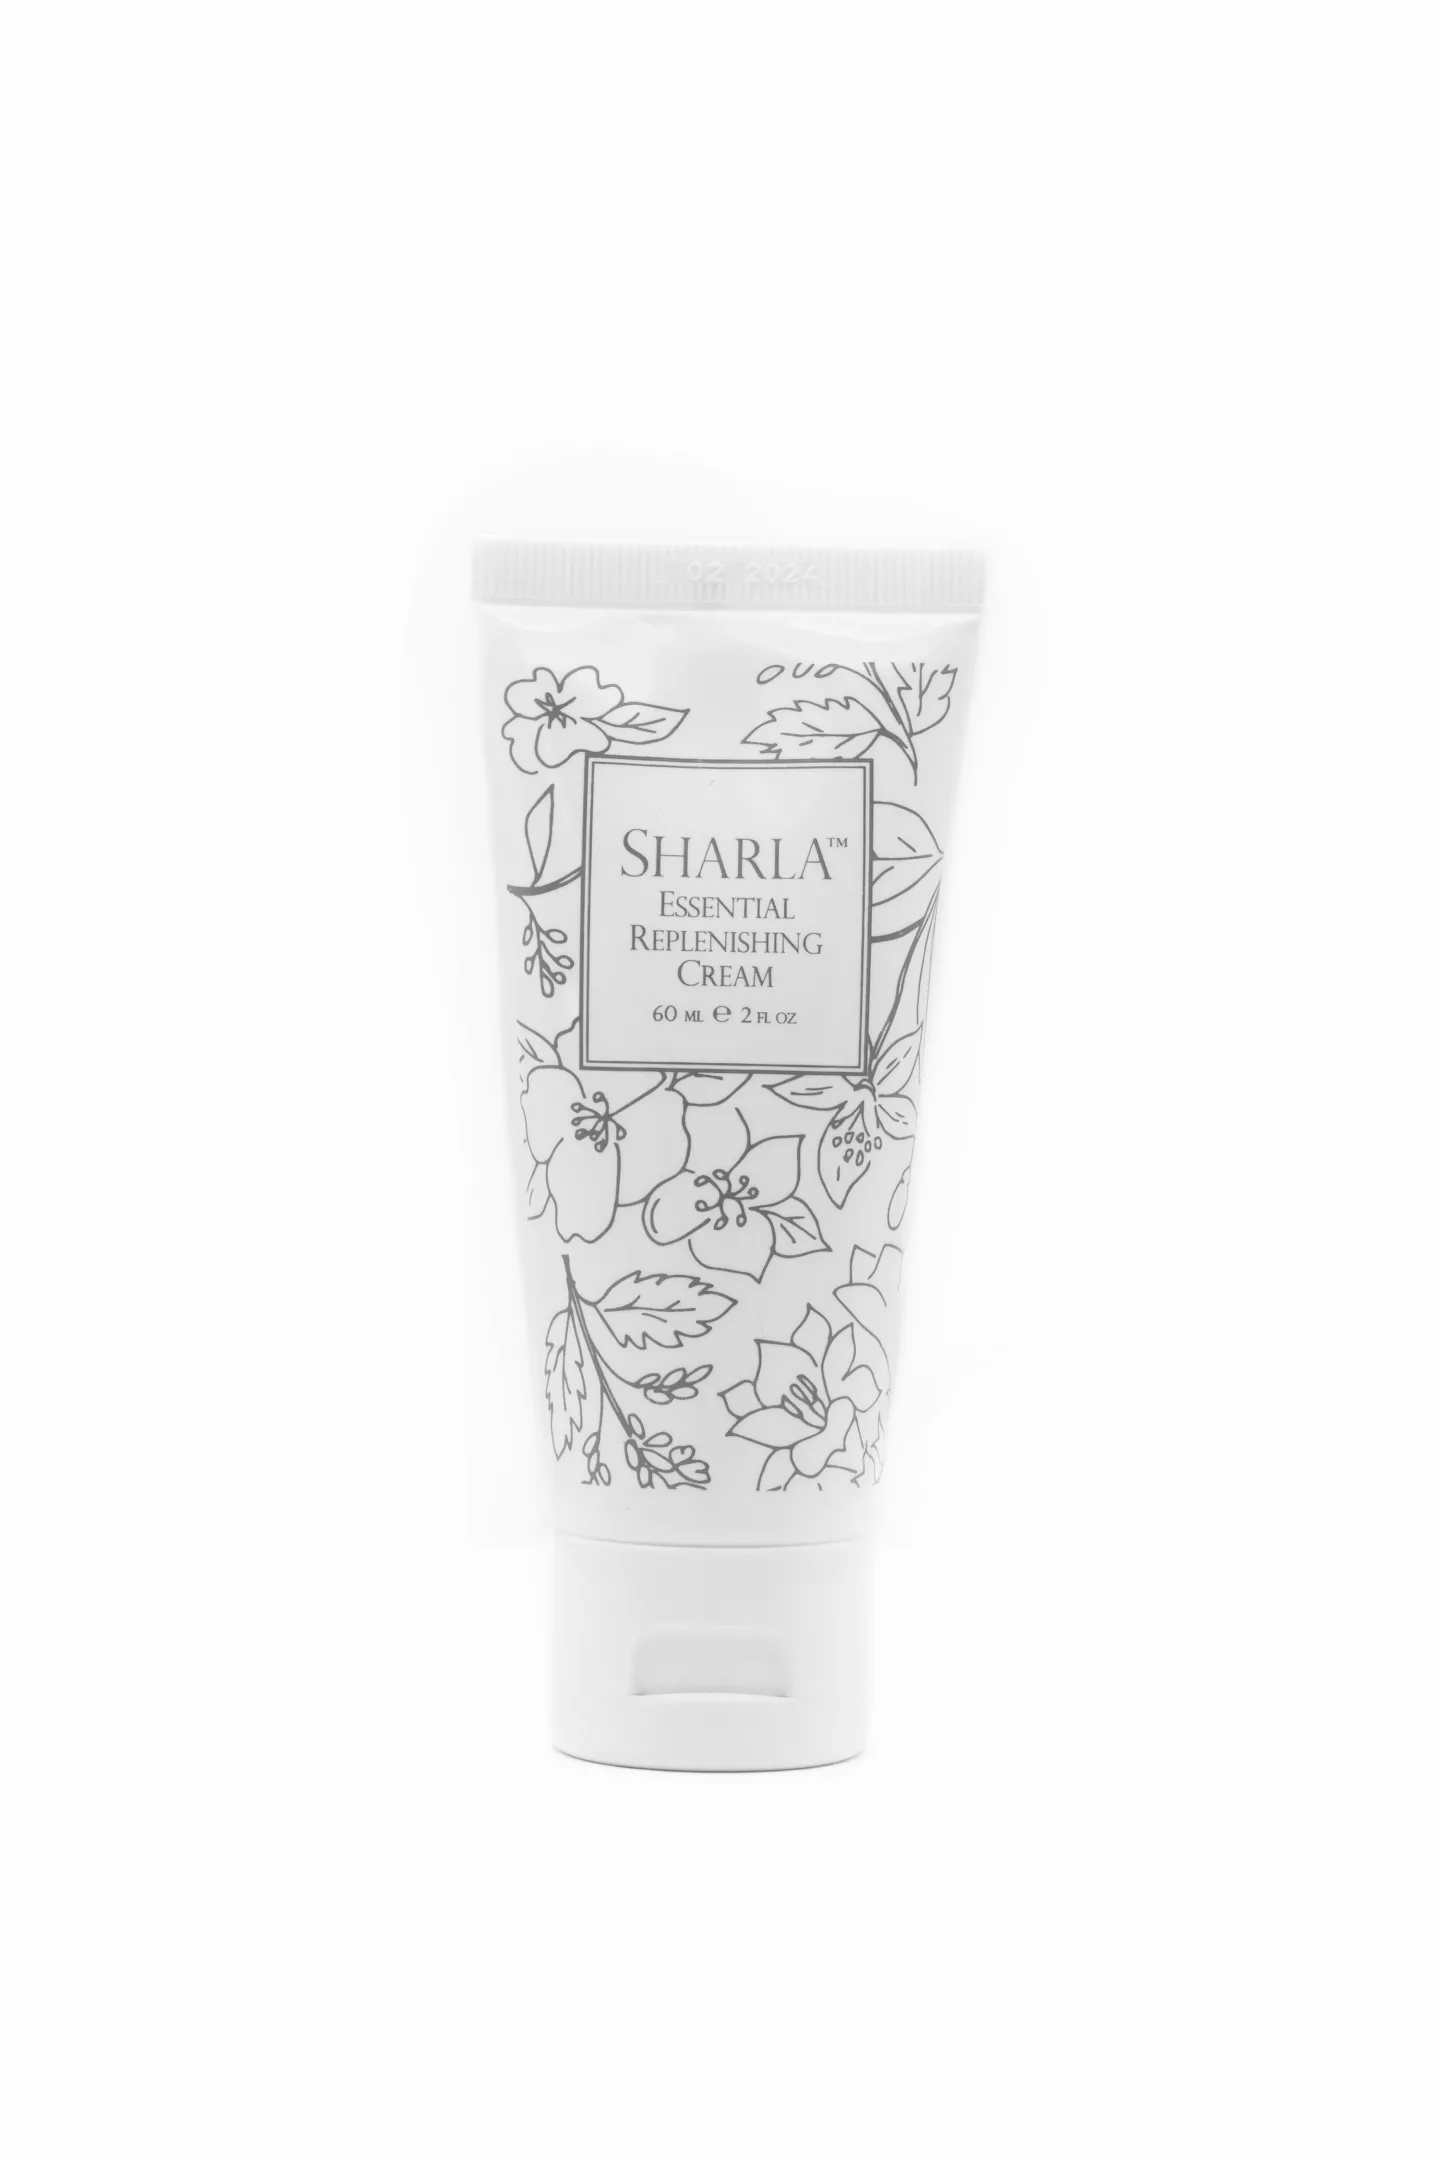 Sharla Essential Replenishing Cream - Travel - Sharla's